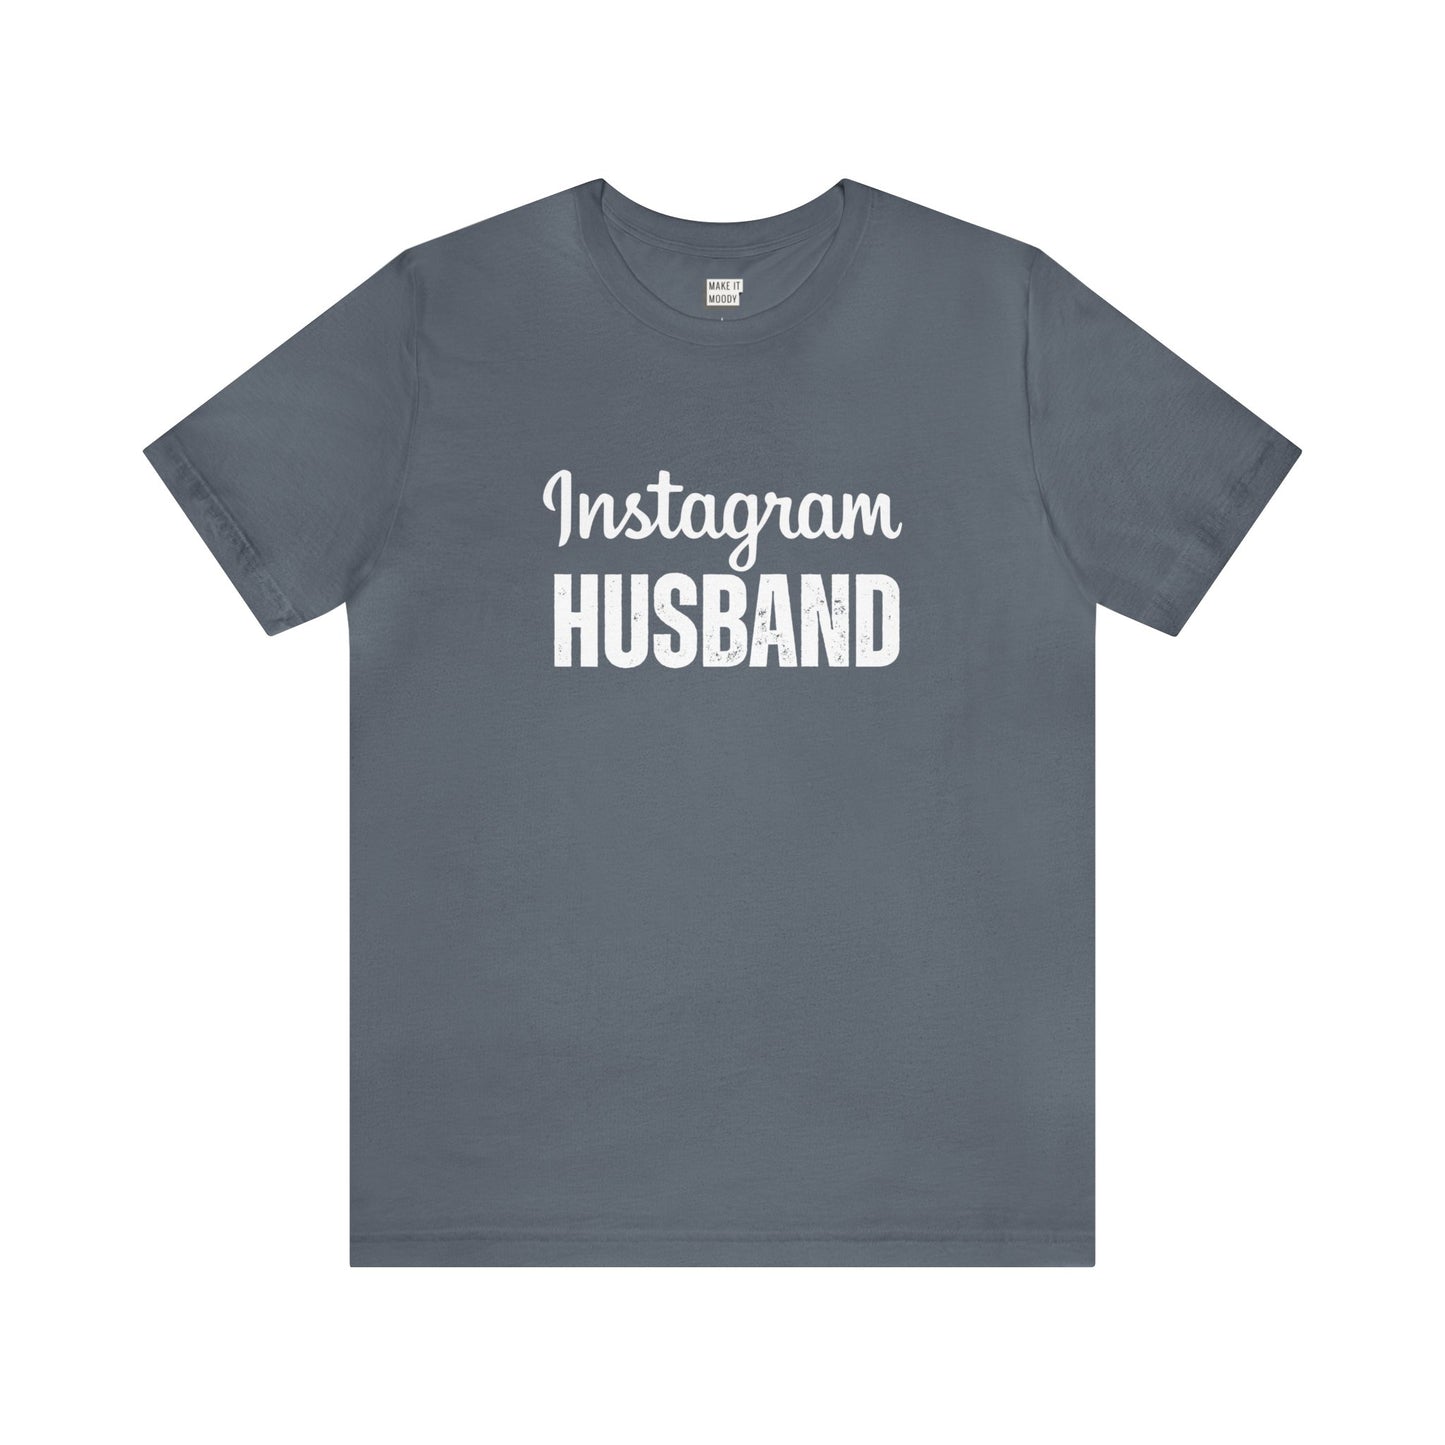 "Instagram Husband" Tee